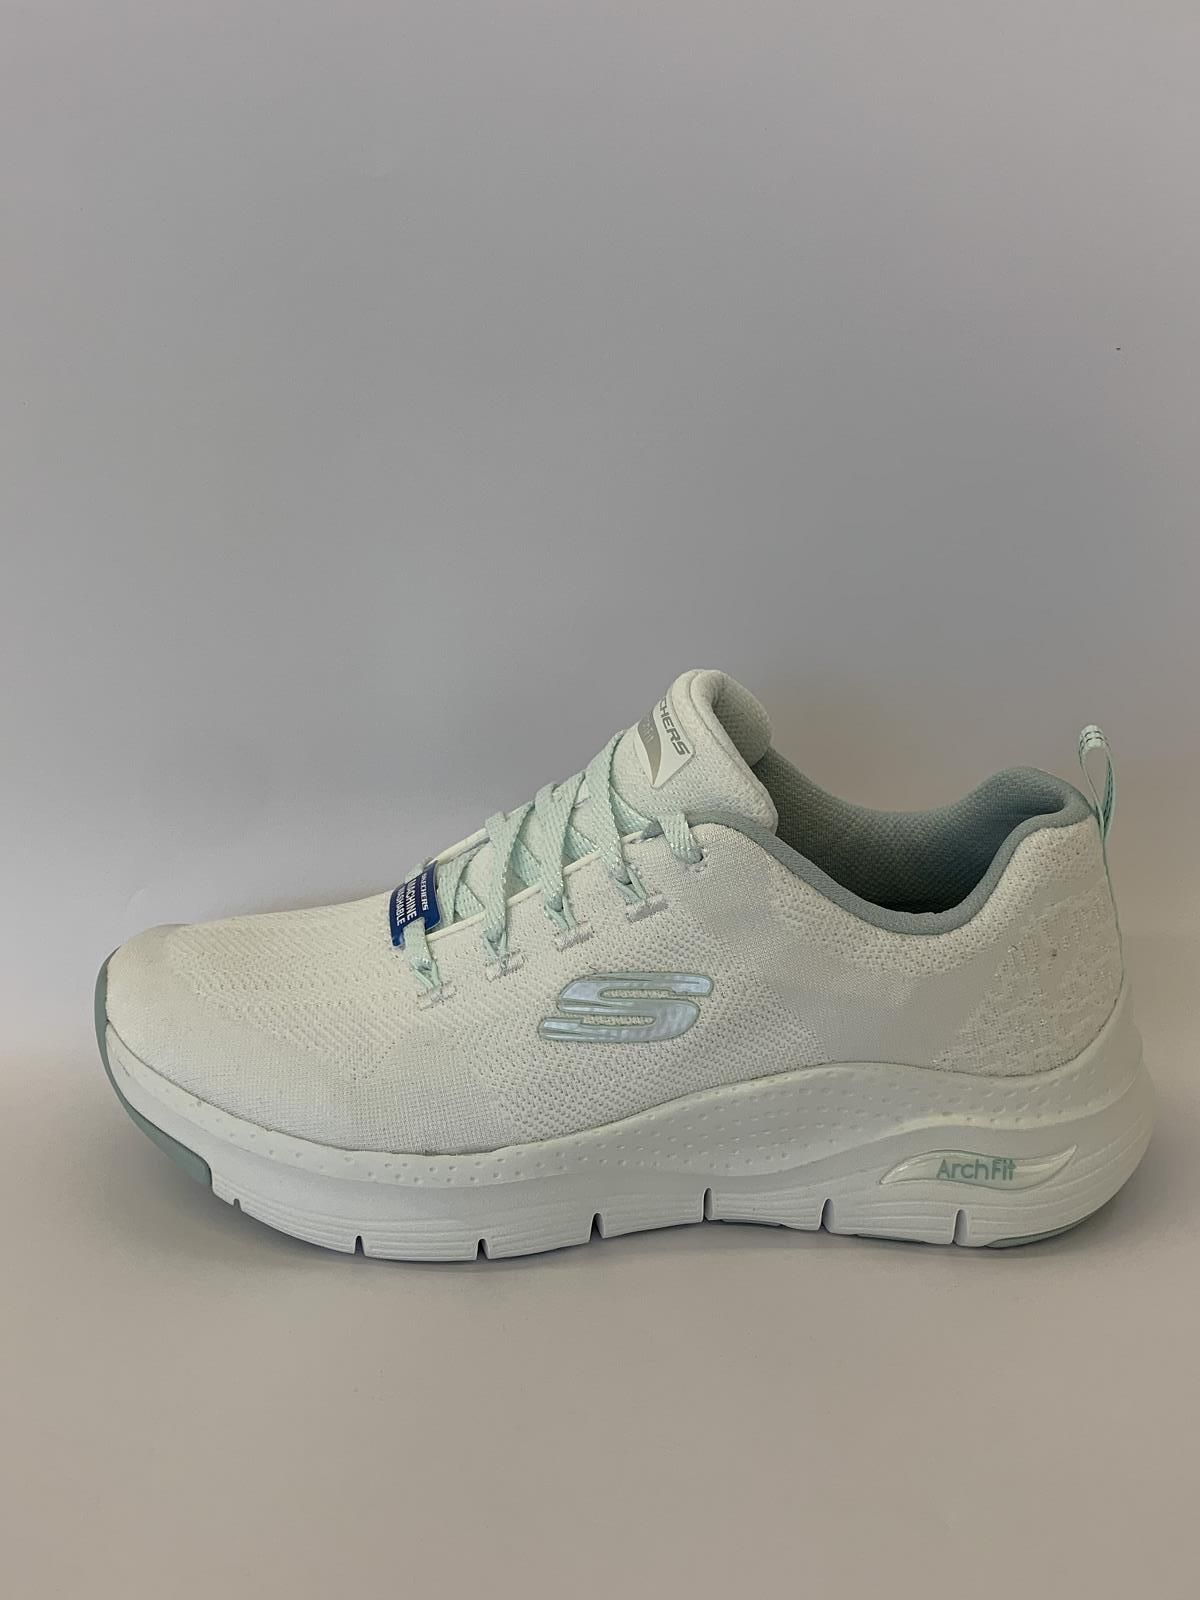 Skechers Sneaker Wit+kleur dames (Runner Arch Fit Munt - 149414) - Schoenen Luca